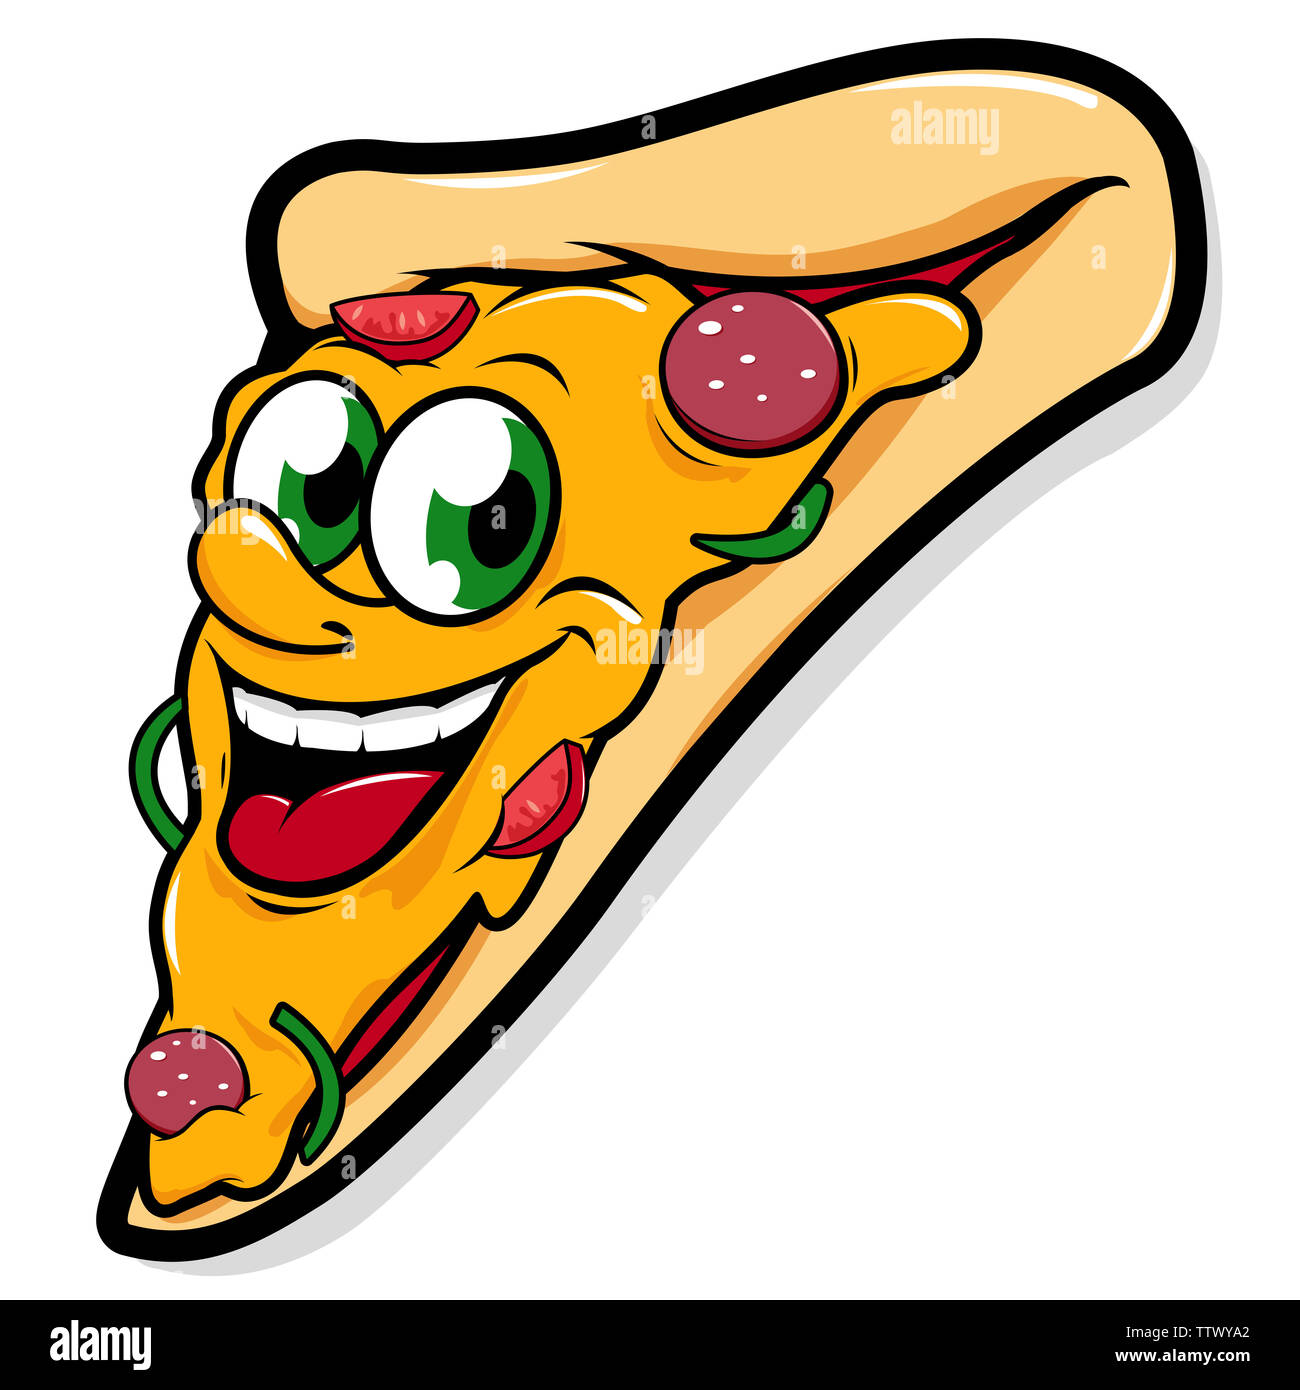 Illustration of a happy cartoon pizza slice character. Stock Photo